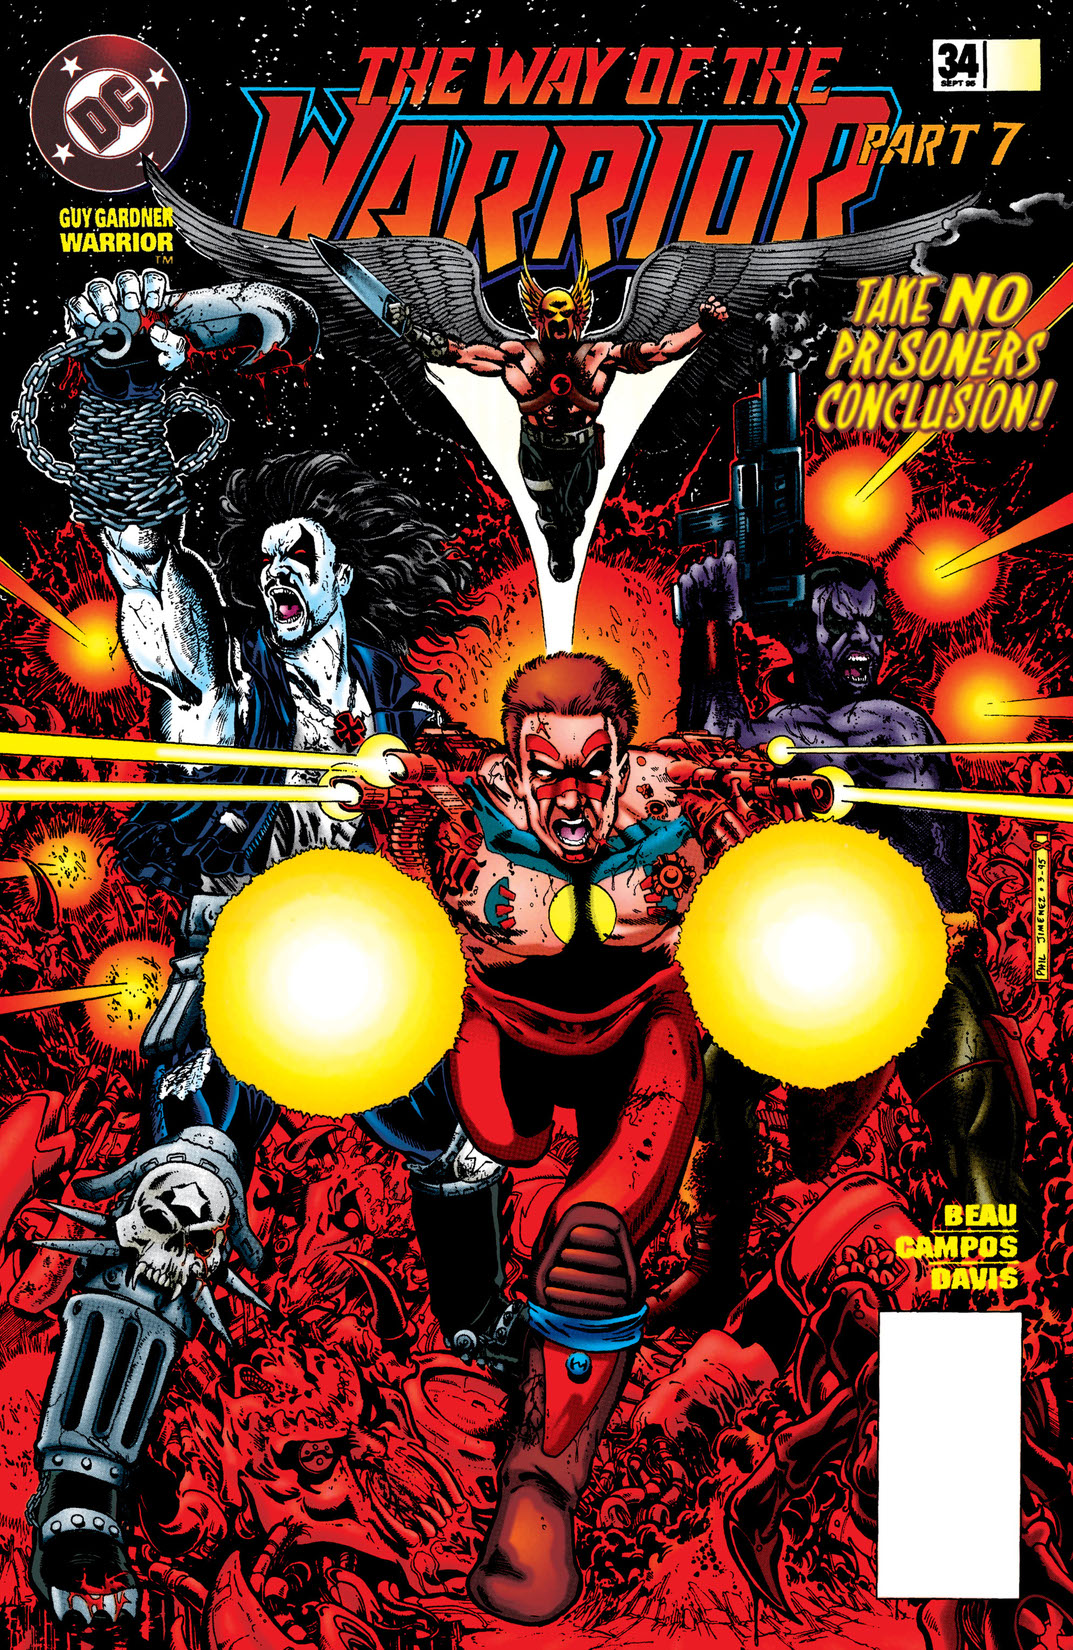 Guy Gardner: Warrior #34 preview images